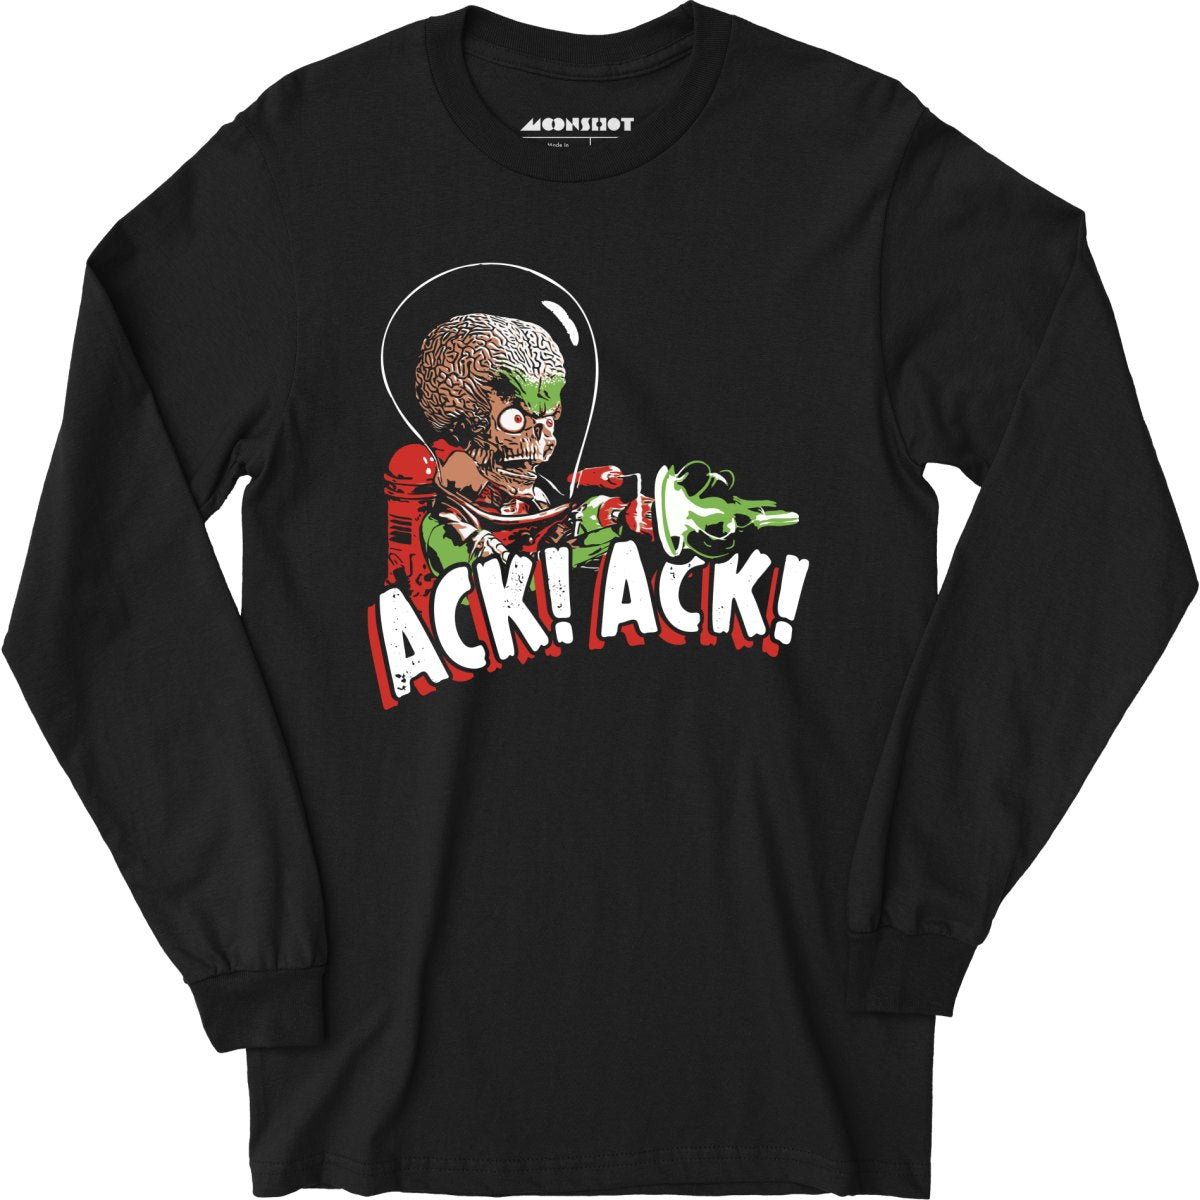 Ack! Ack! - Long Sleeve T-Shirt